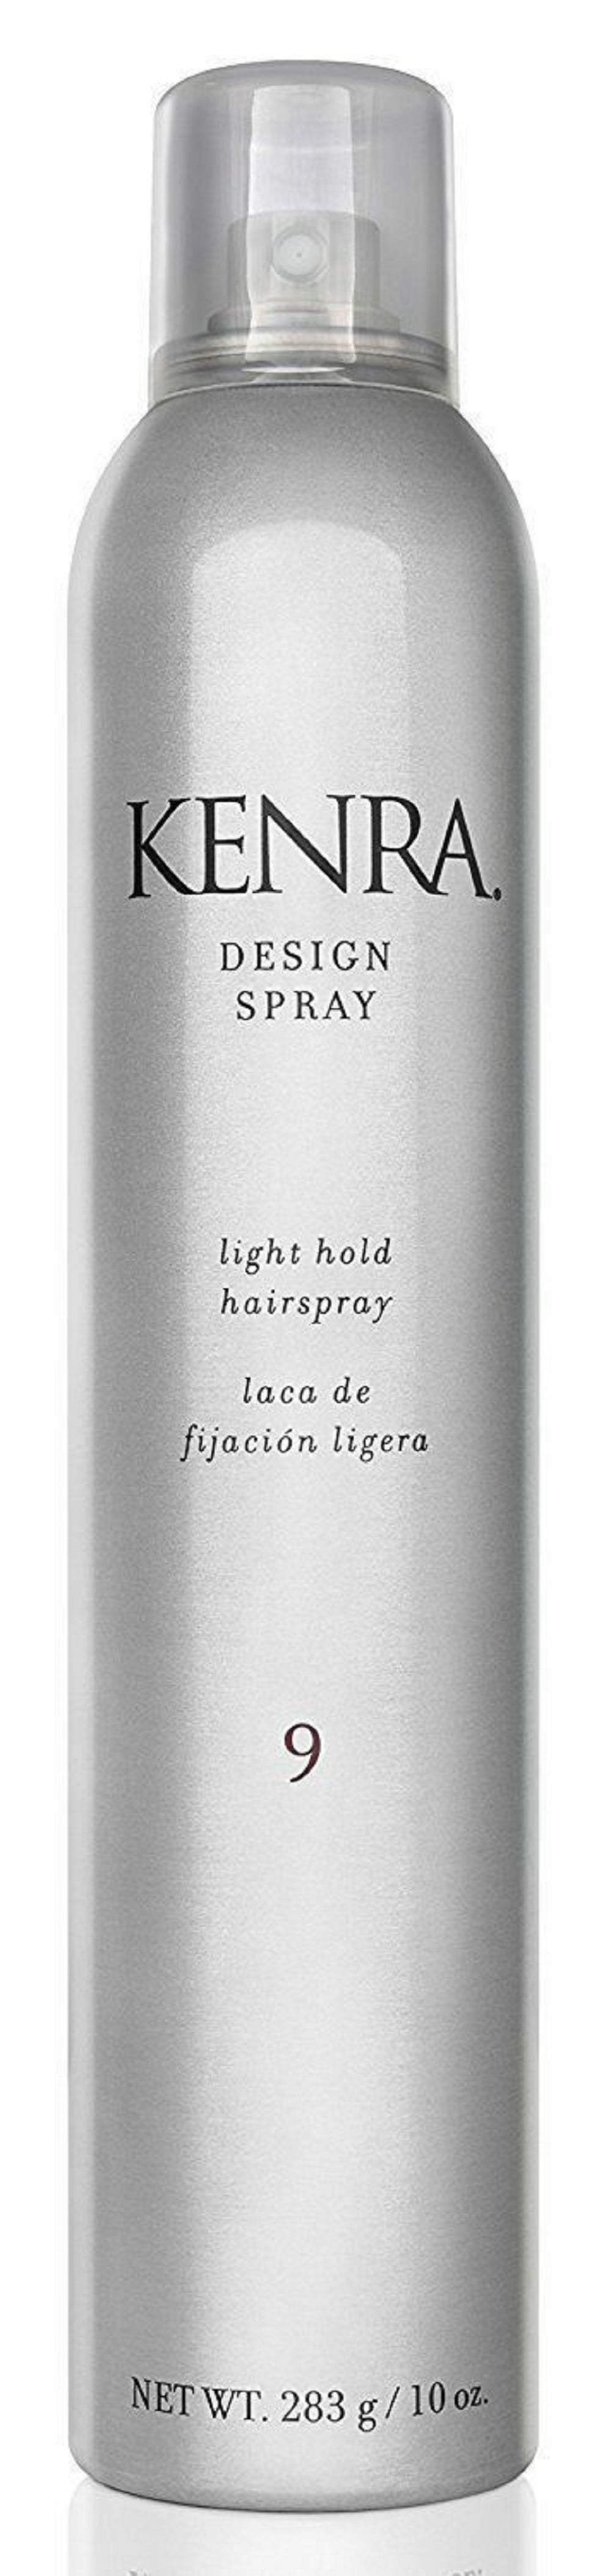 Kenra Design Spray Light Hold Hairspray #9 10 Oz 